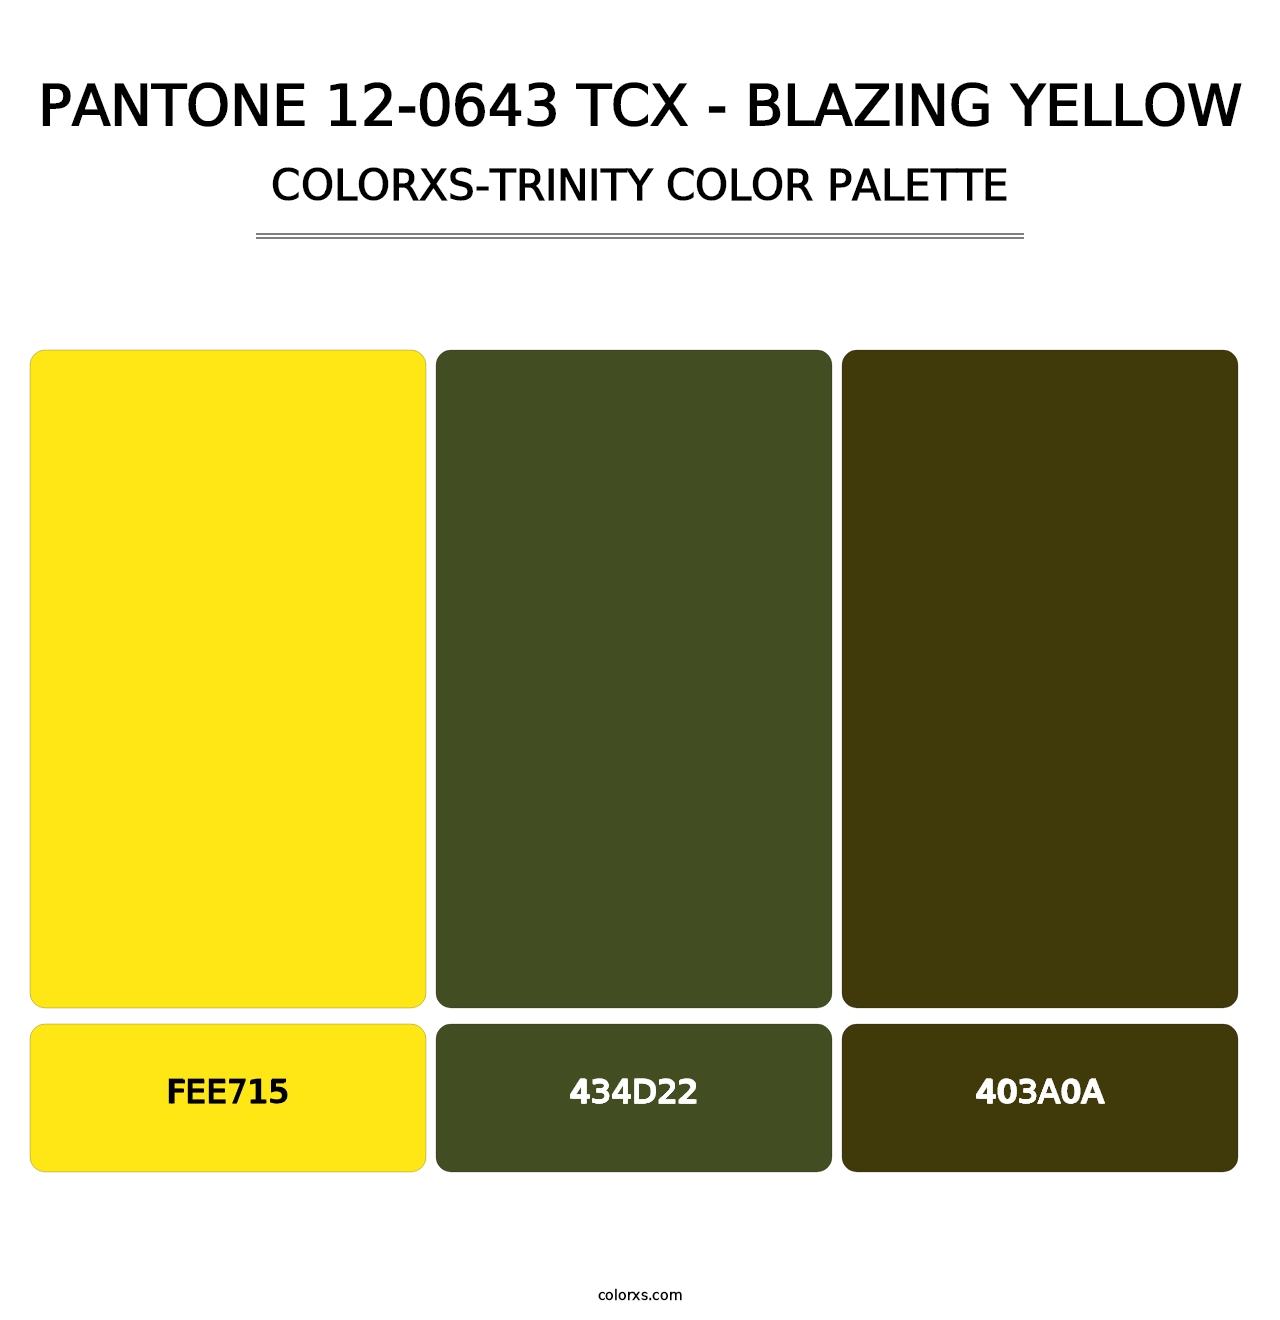 PANTONE 12-0643 TCX - Blazing Yellow - Colorxs Trinity Palette